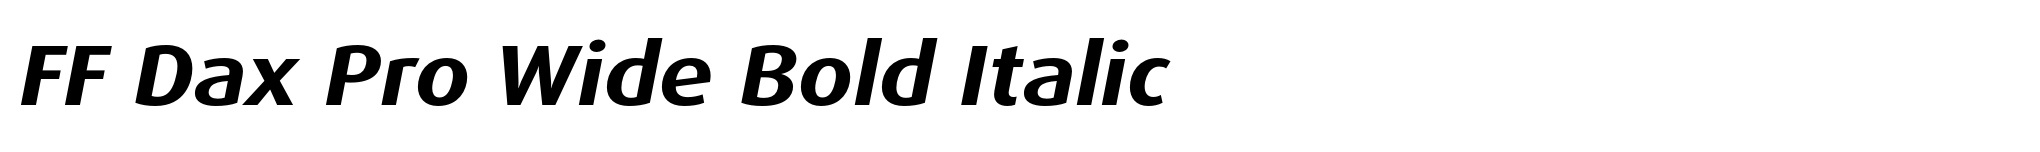 FF Dax Pro Wide Bold Italic image